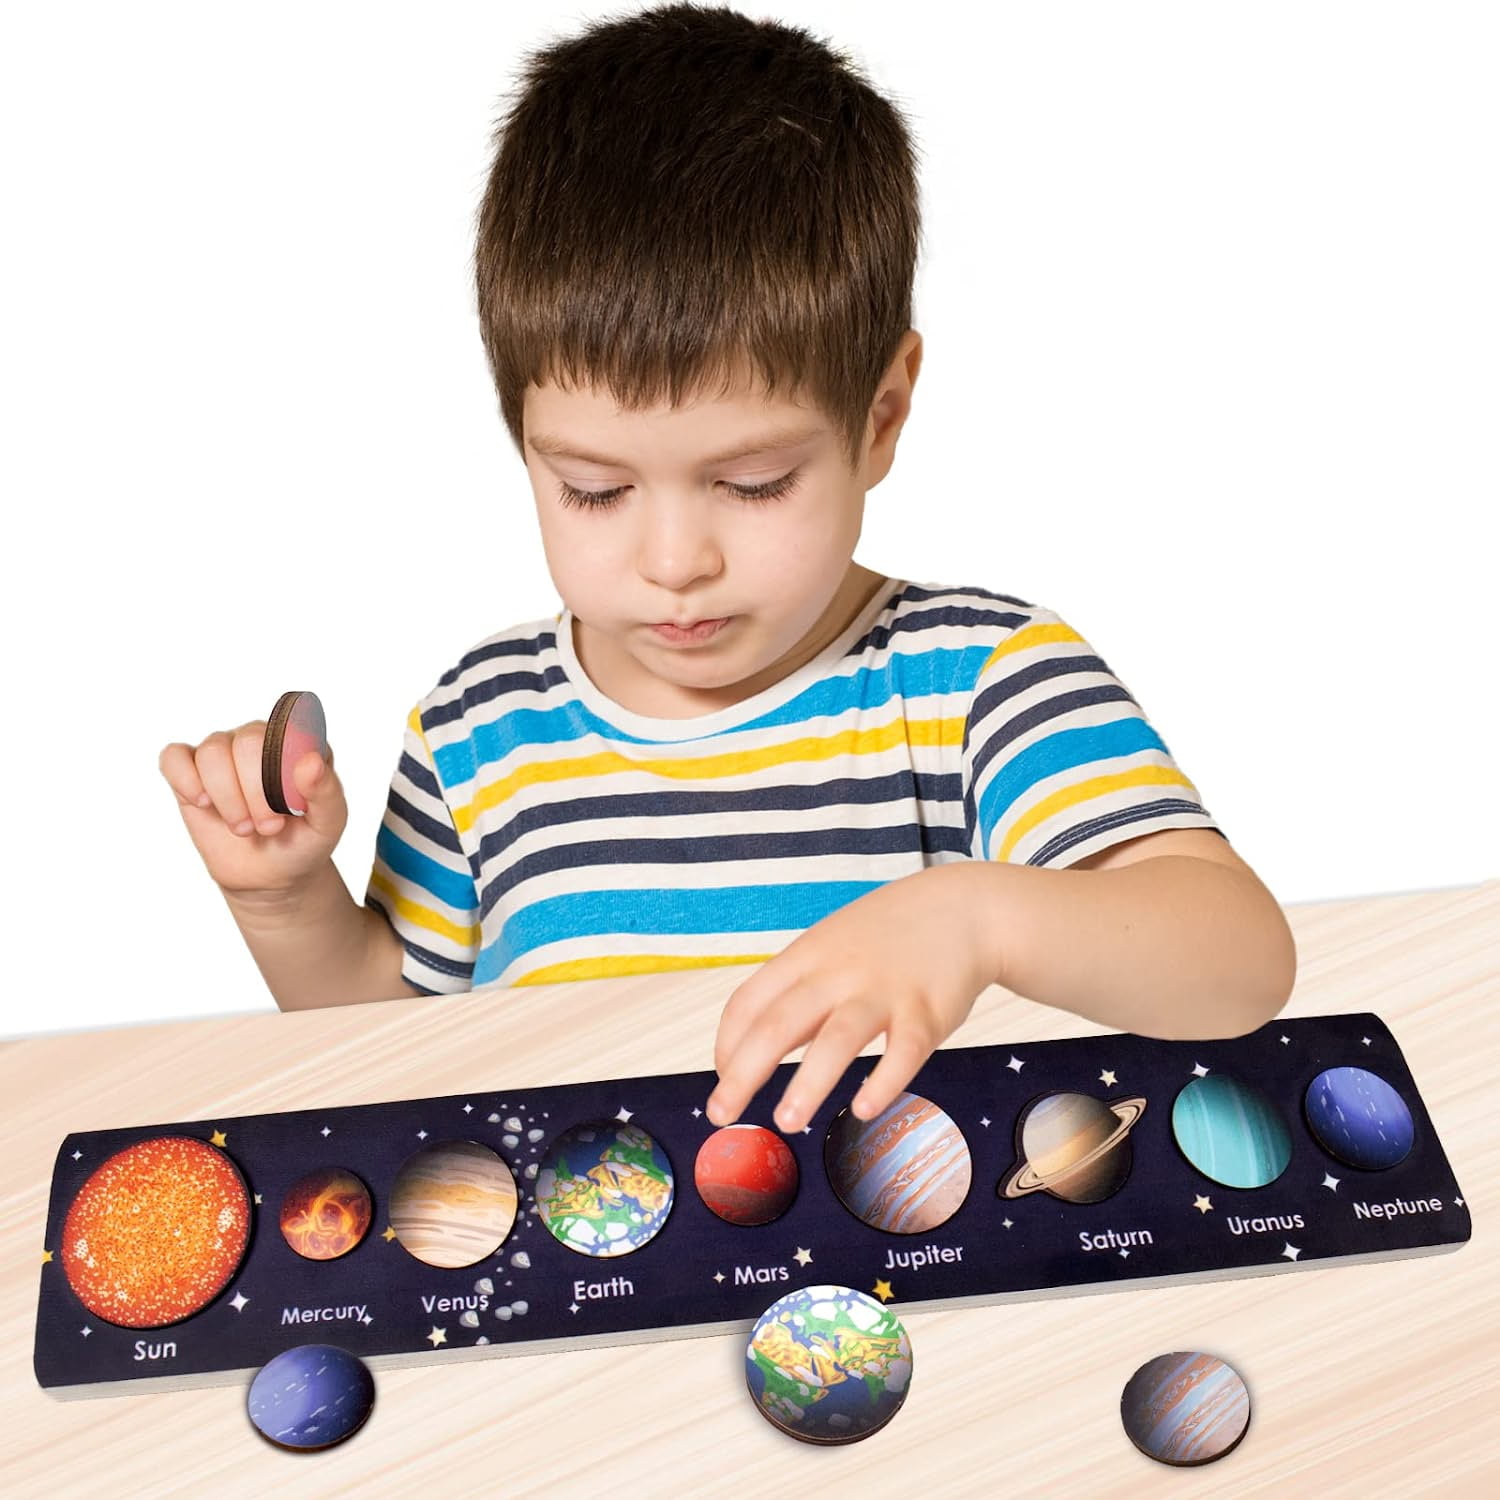 Ghyt Solar System For Kids - Planets For Kids Solar System Toys